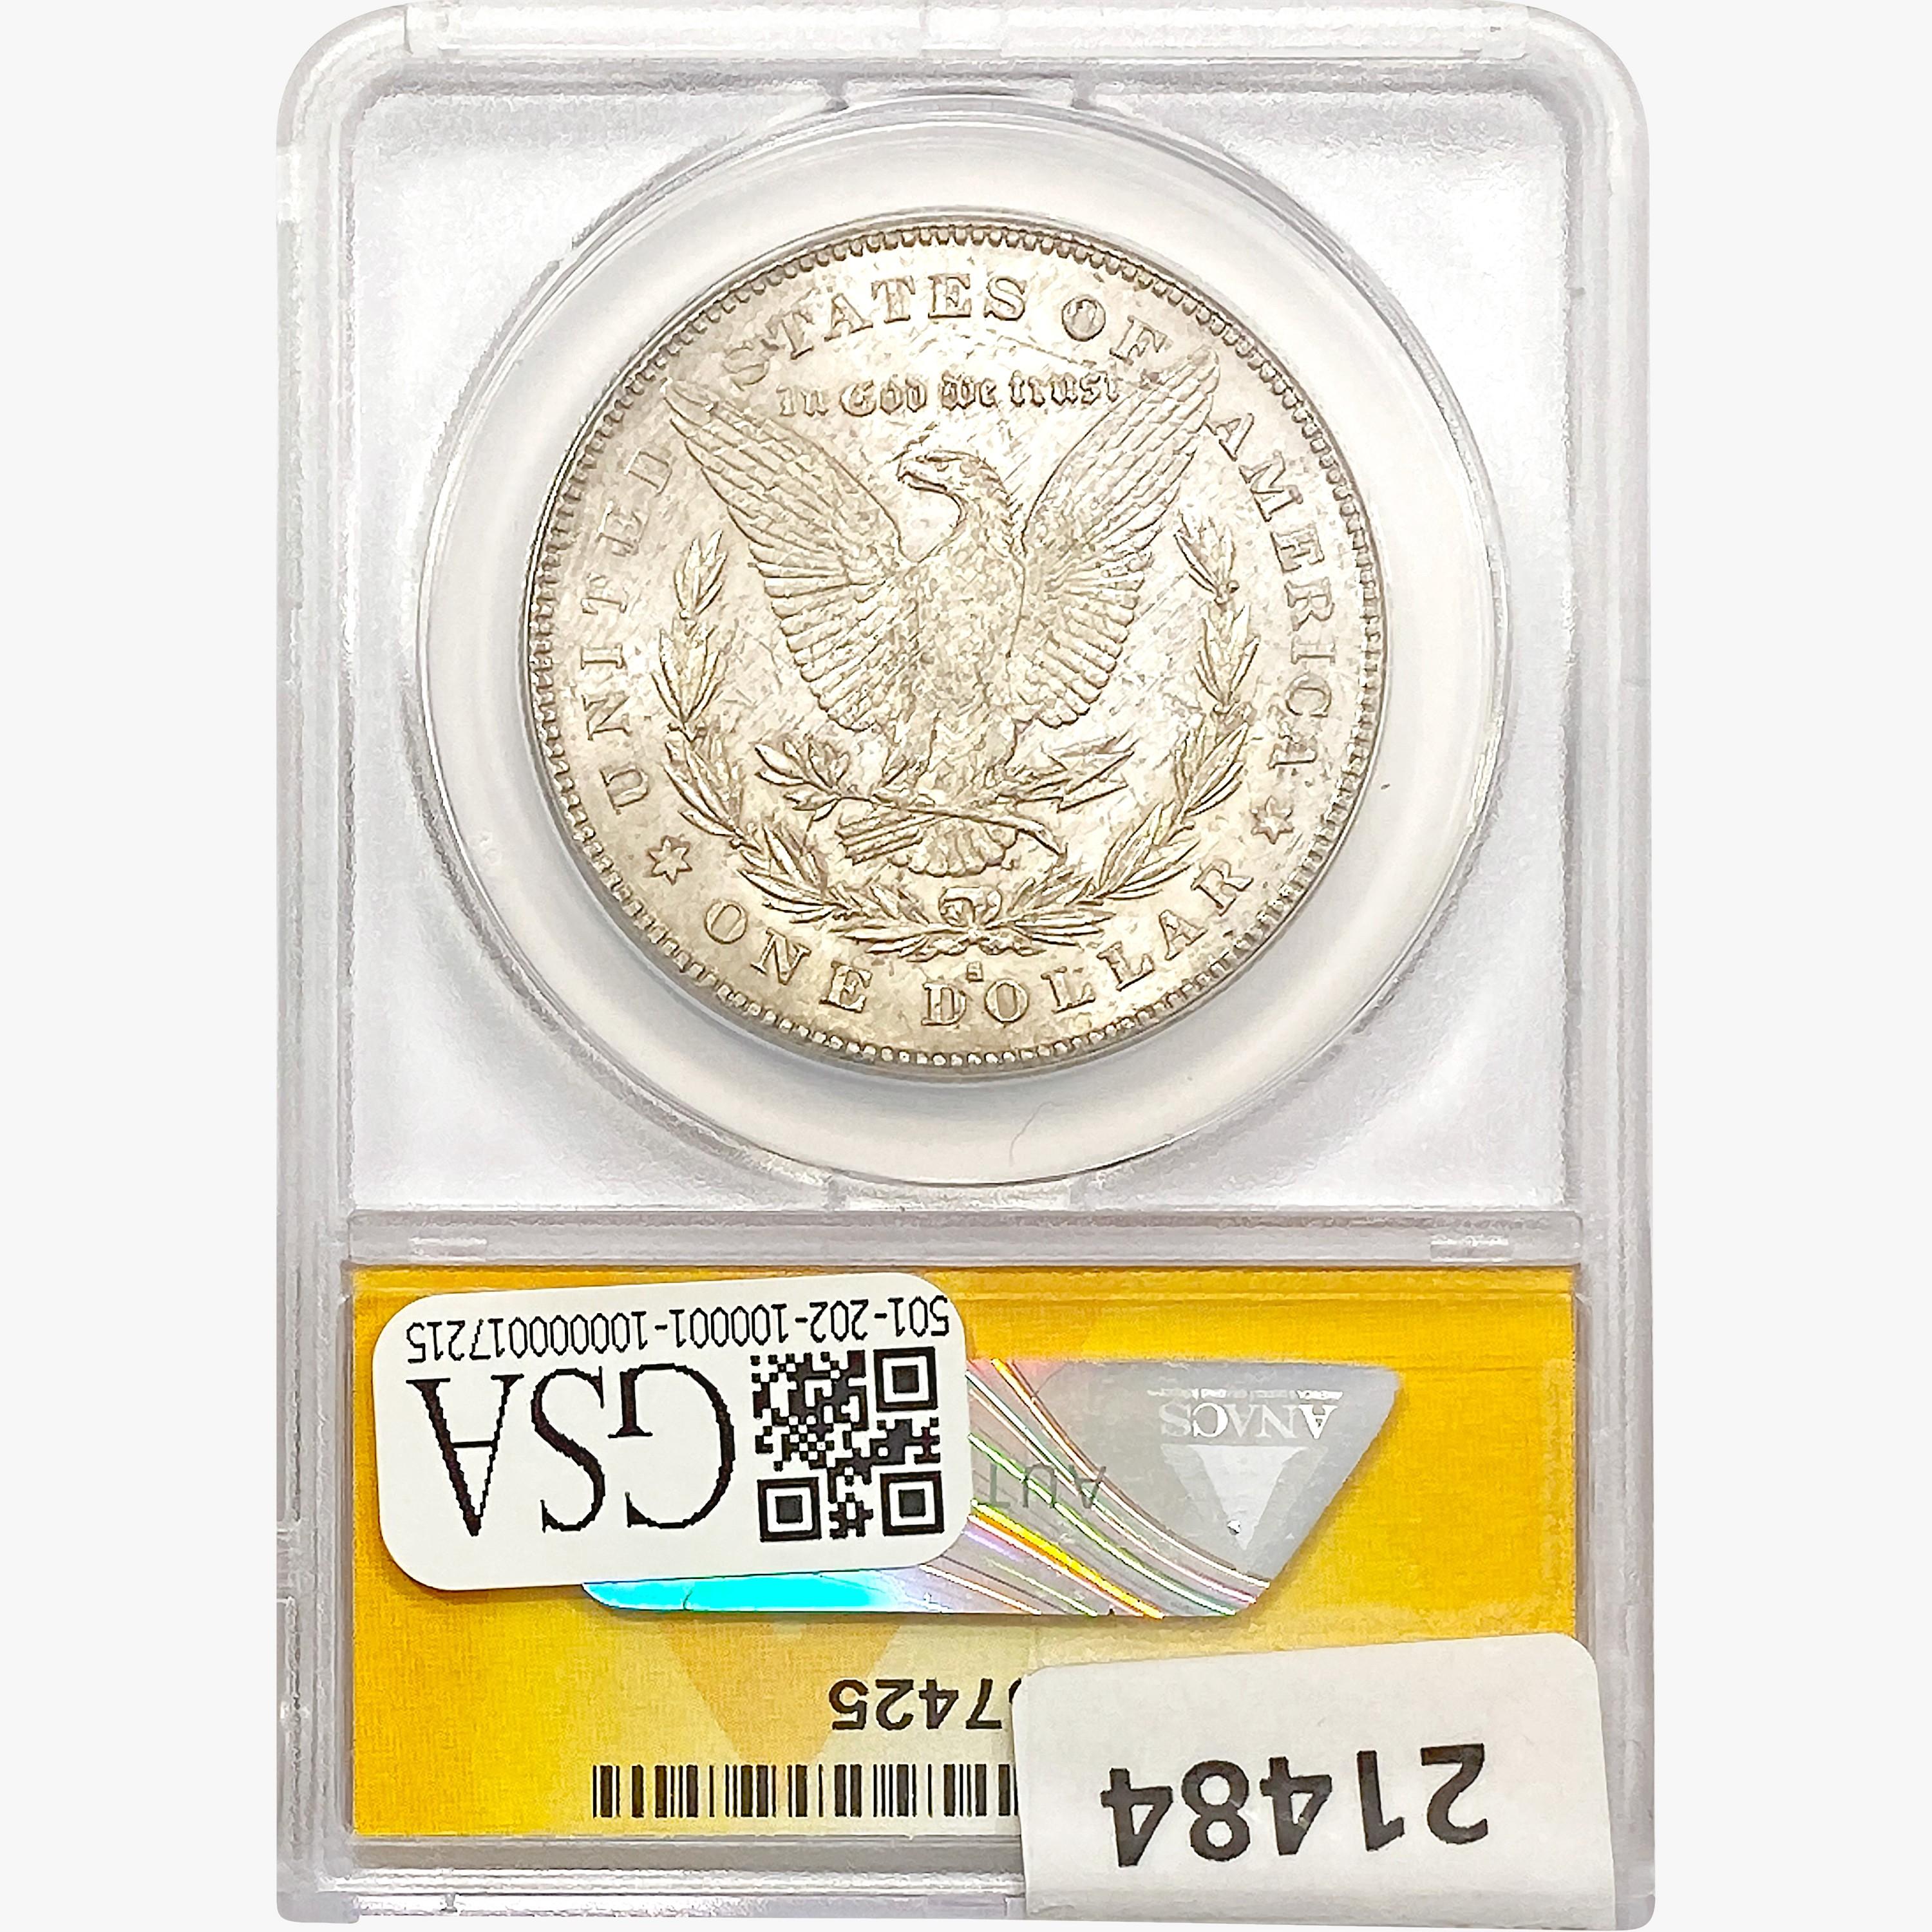 1878-S Morgan Silver Dollar ANACS MS62